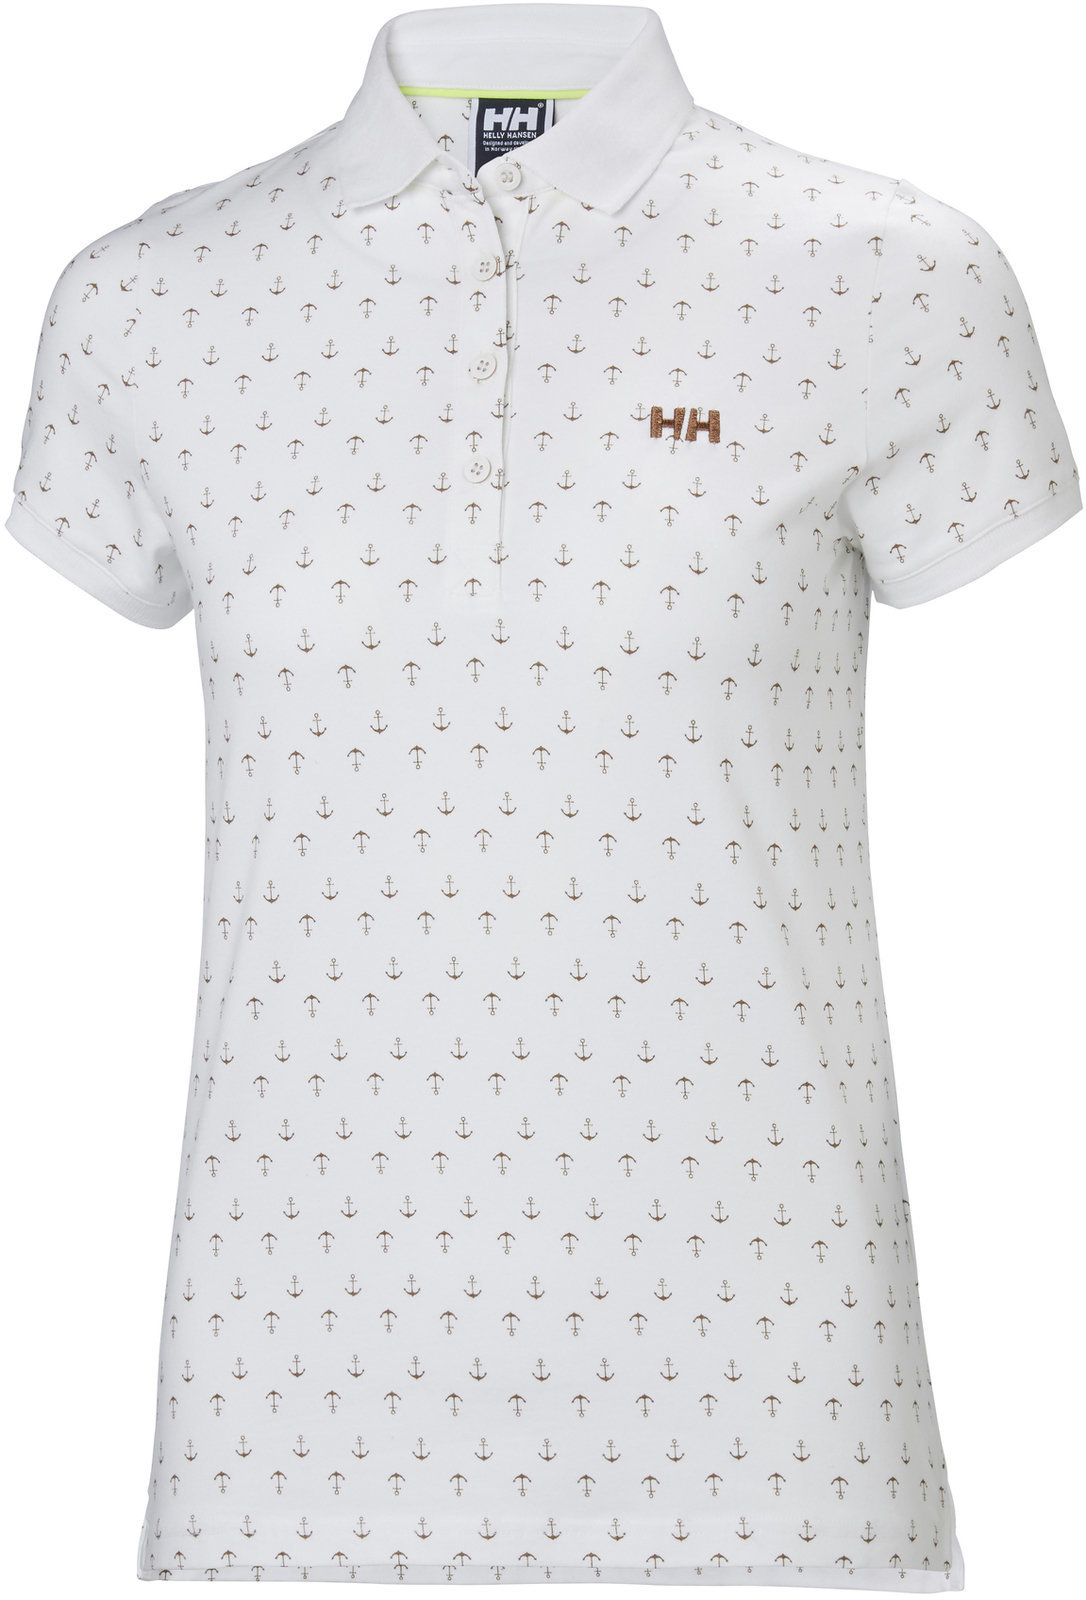 Camisa Helly Hansen W Naiad Breeze Polo White Anchor - XS